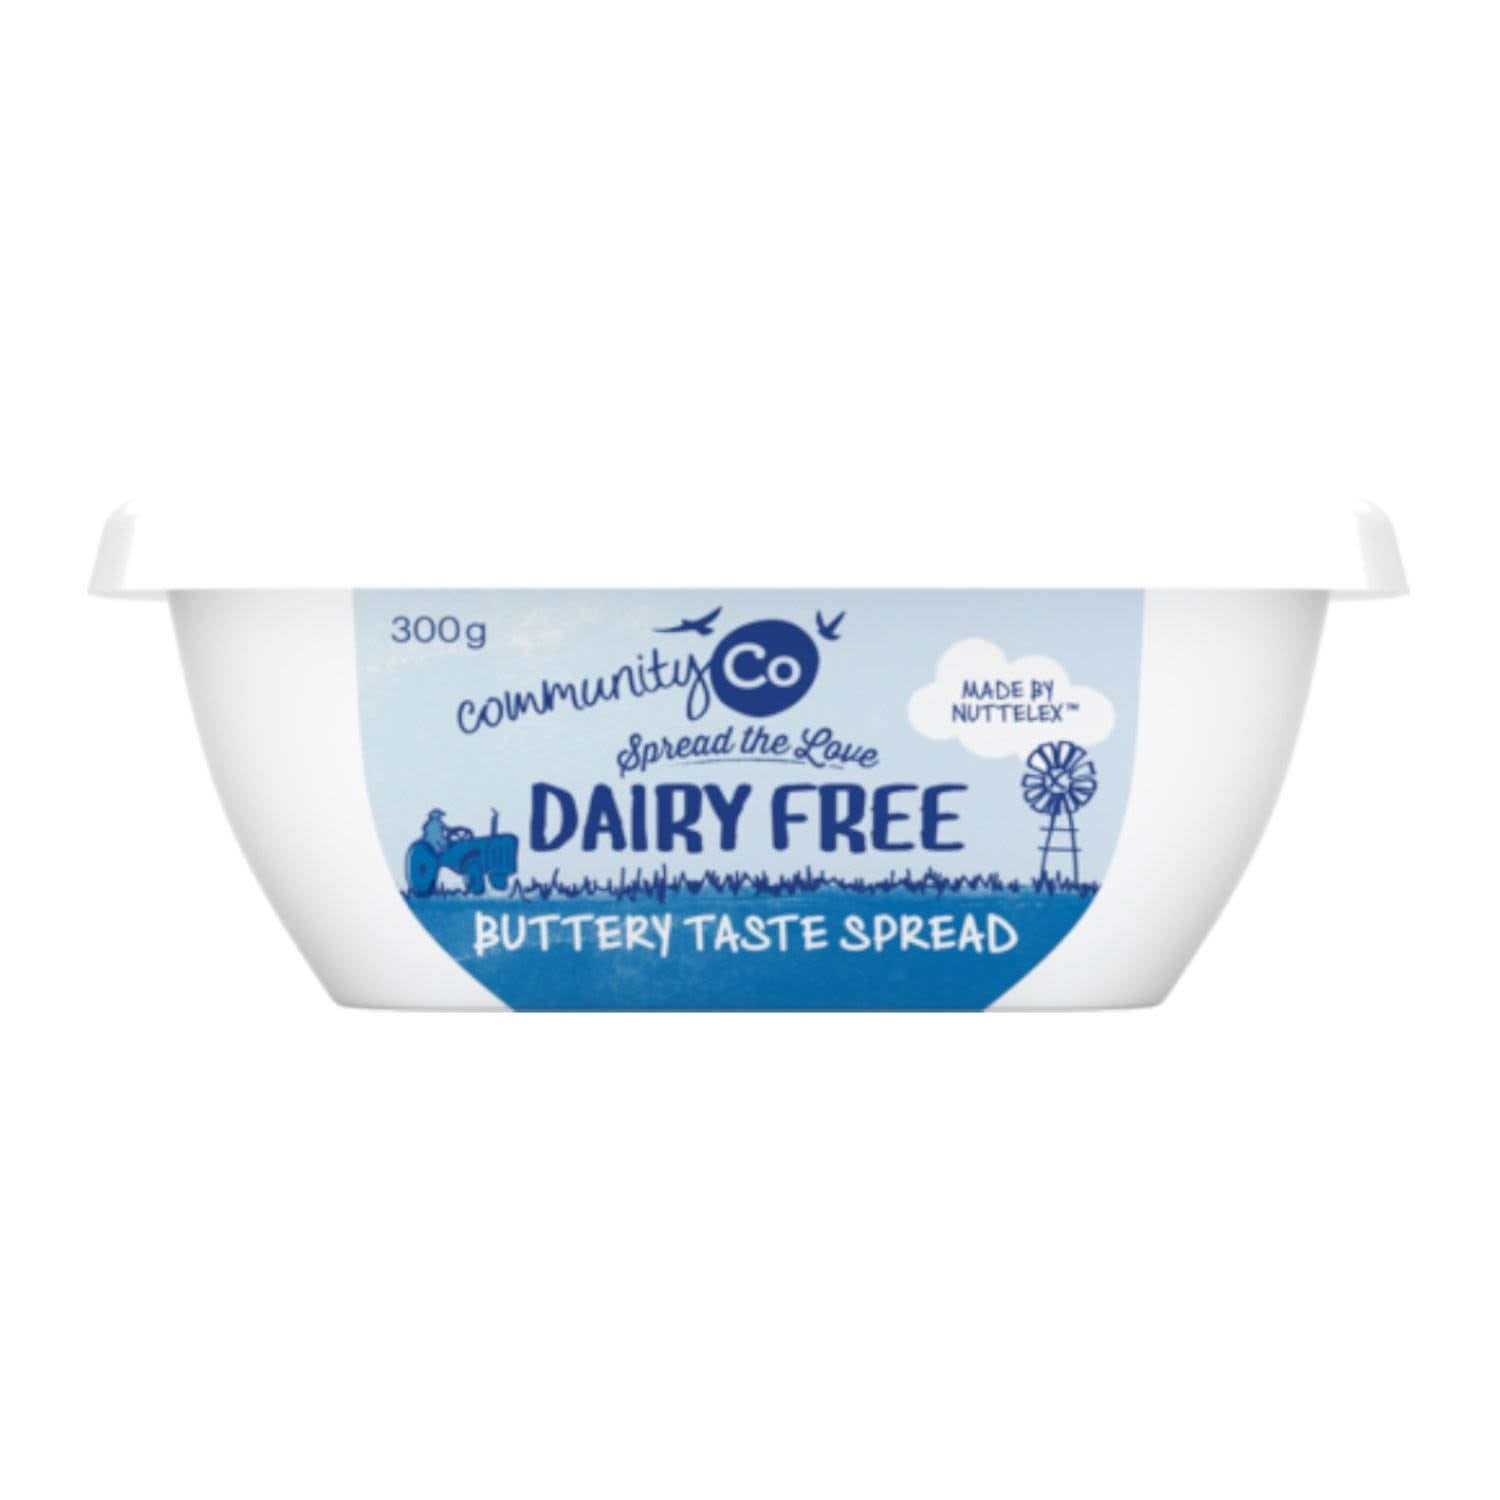 Community Co Dairy Free Buttery Taste Spread 300g